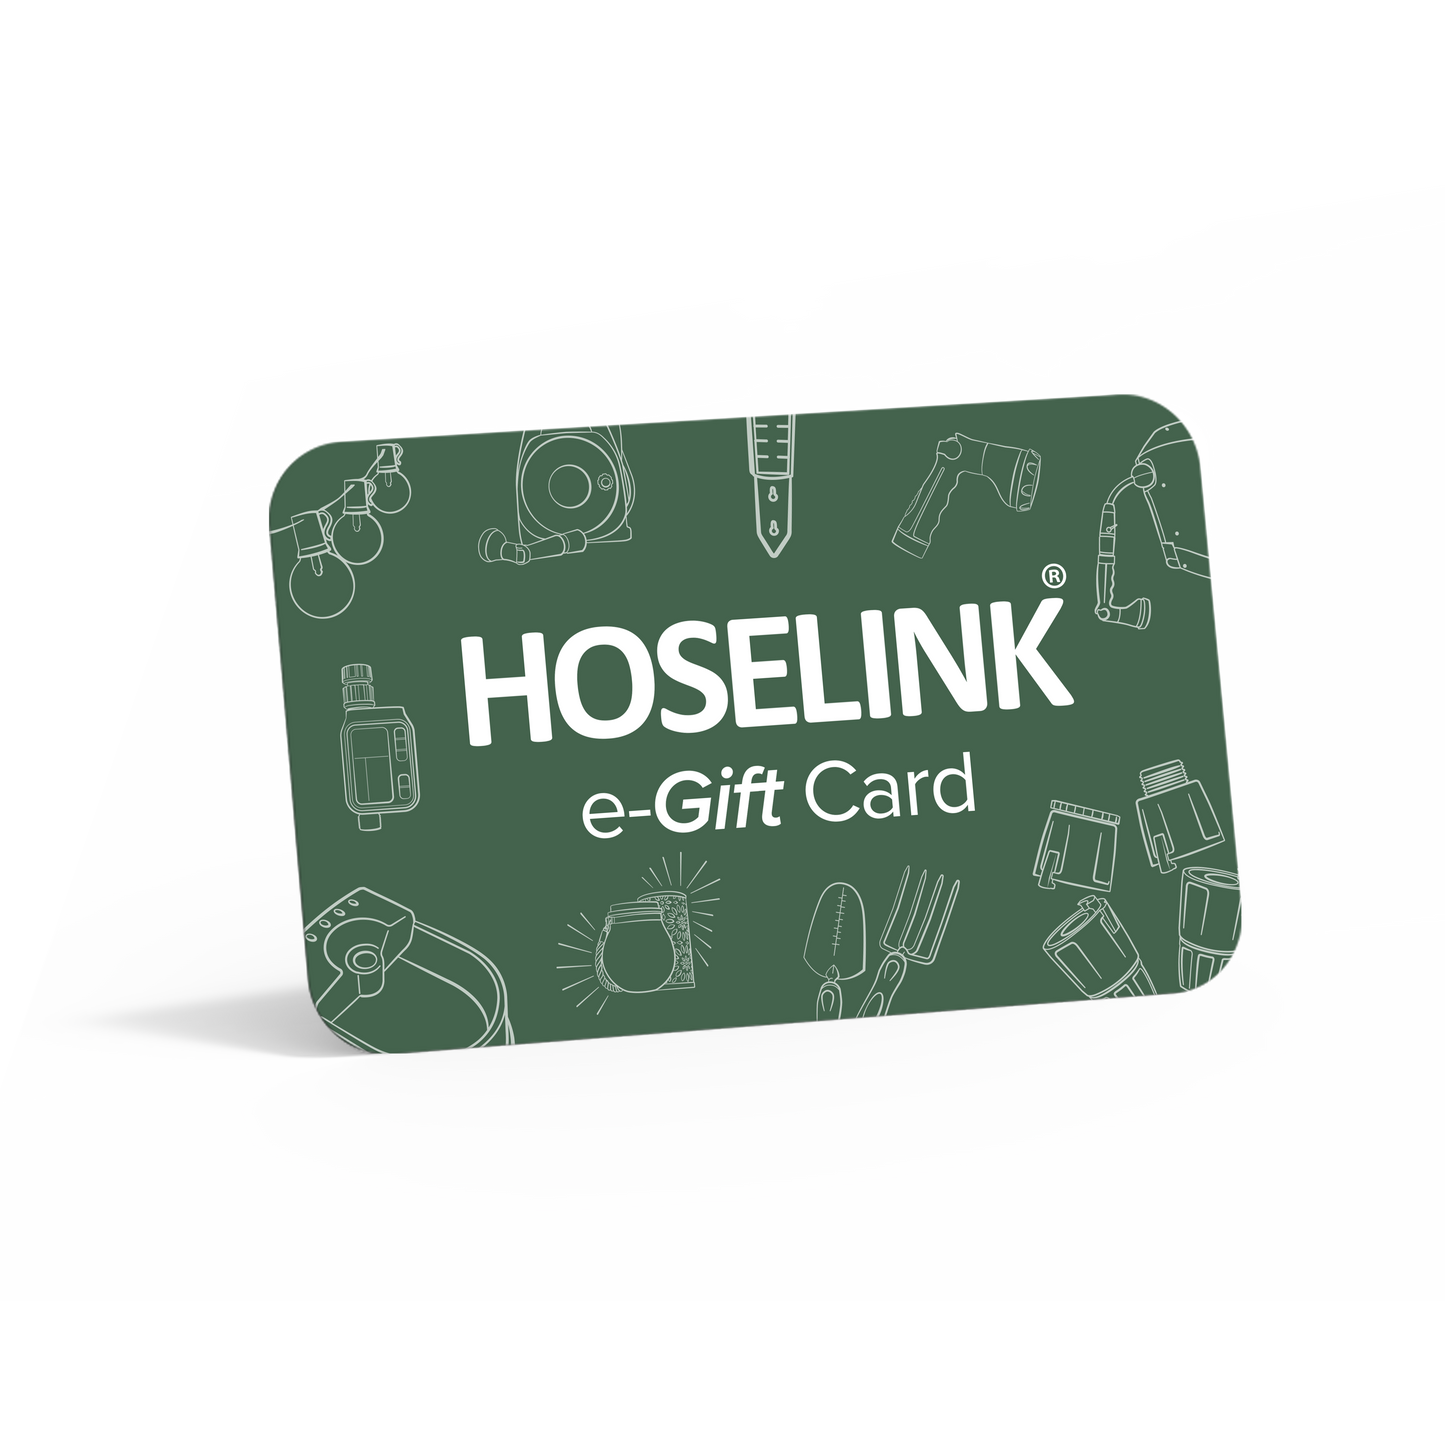 Hoselink e-Gift Card